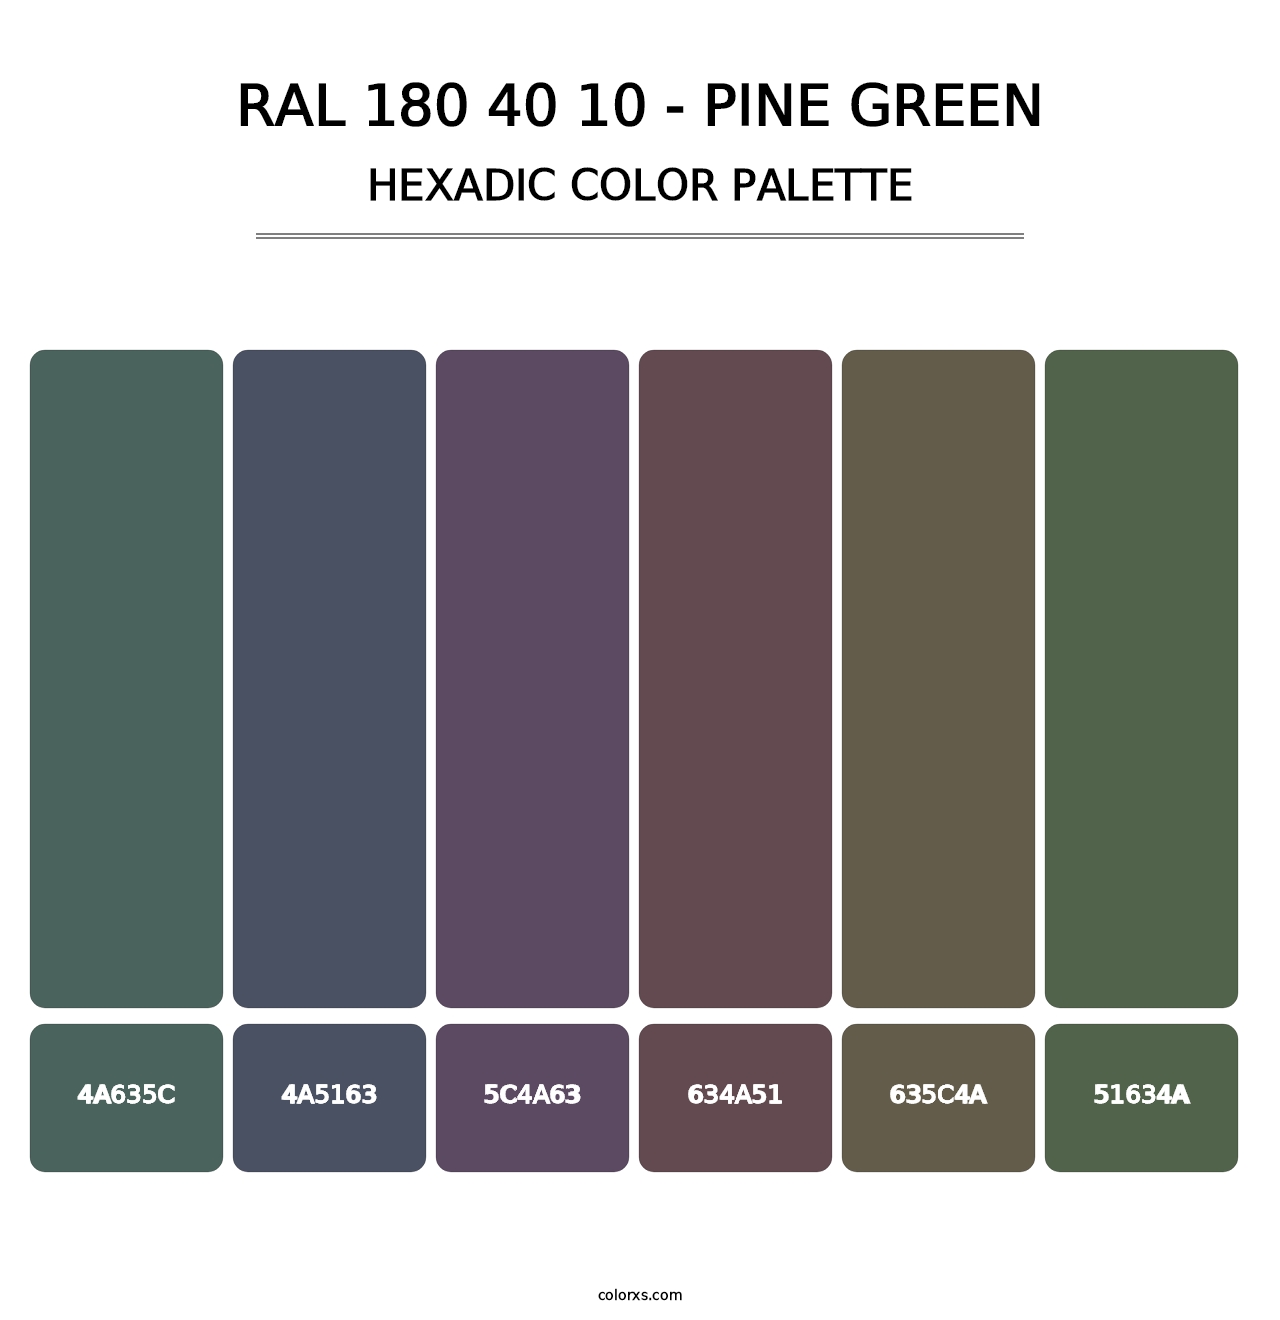 RAL 180 40 10 - Pine Green - Hexadic Color Palette